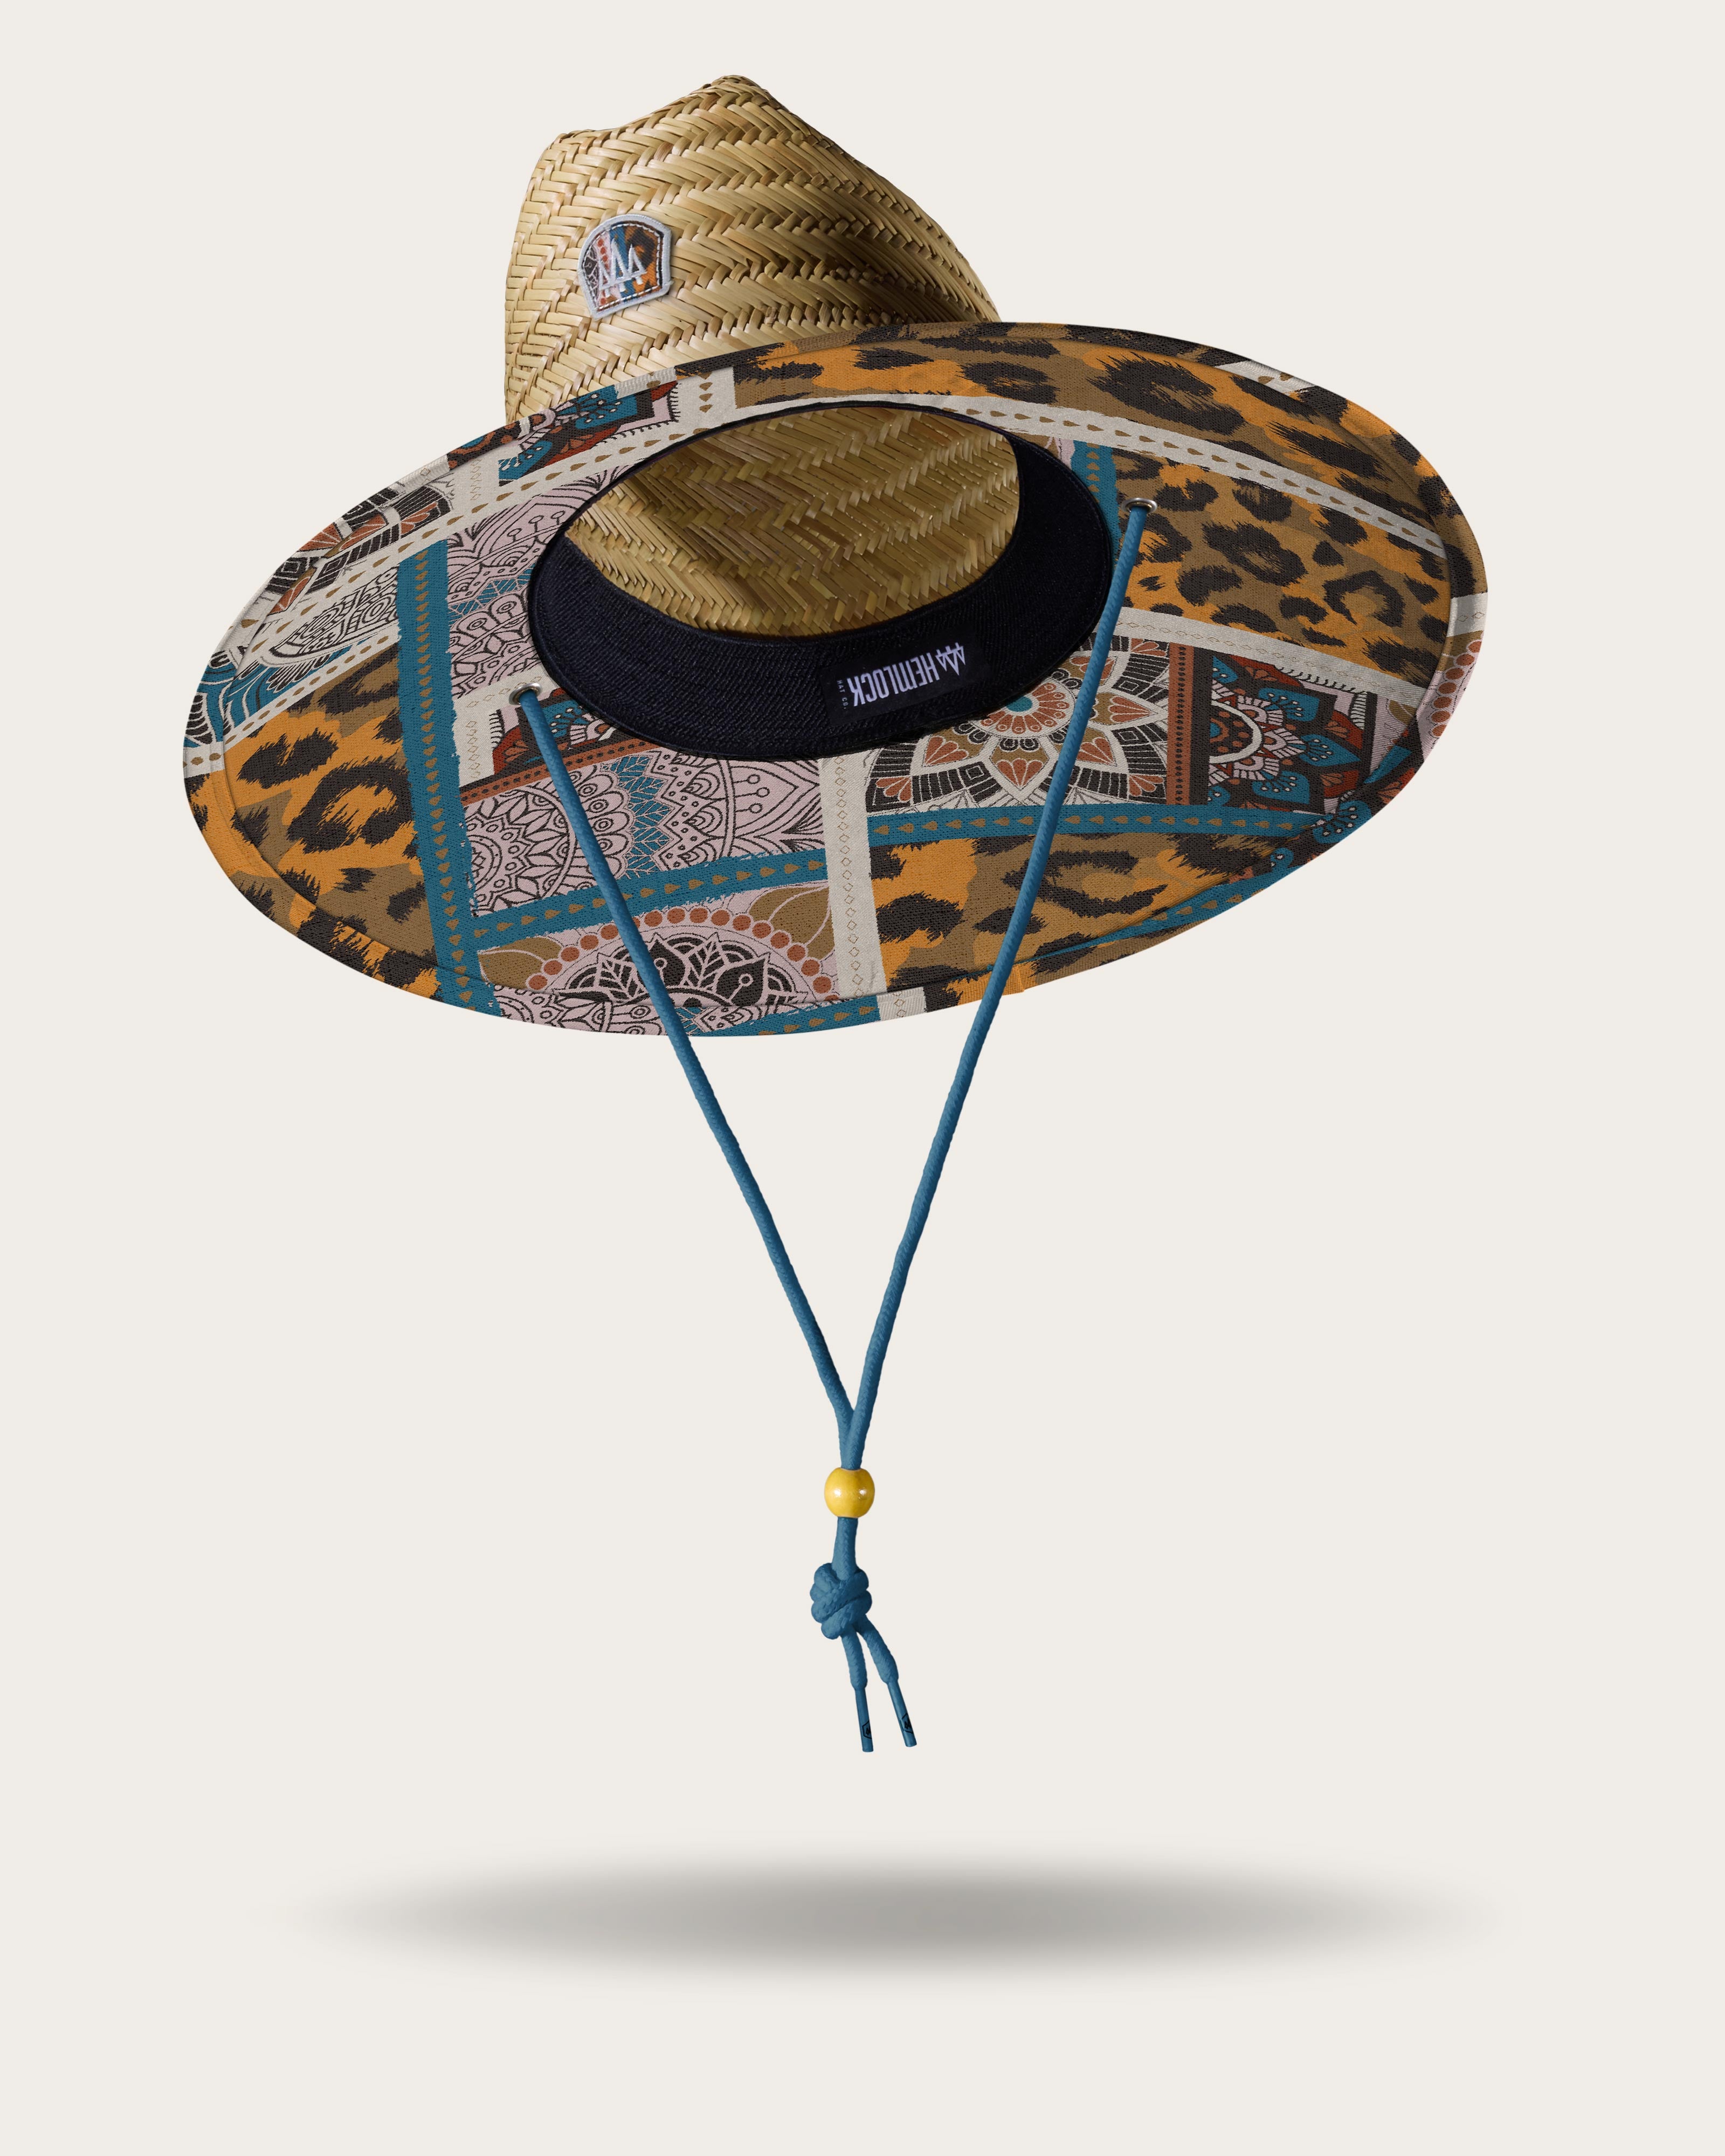 Hemlock Bazaar straw lifeguard hat with cheetah mosaic pattern